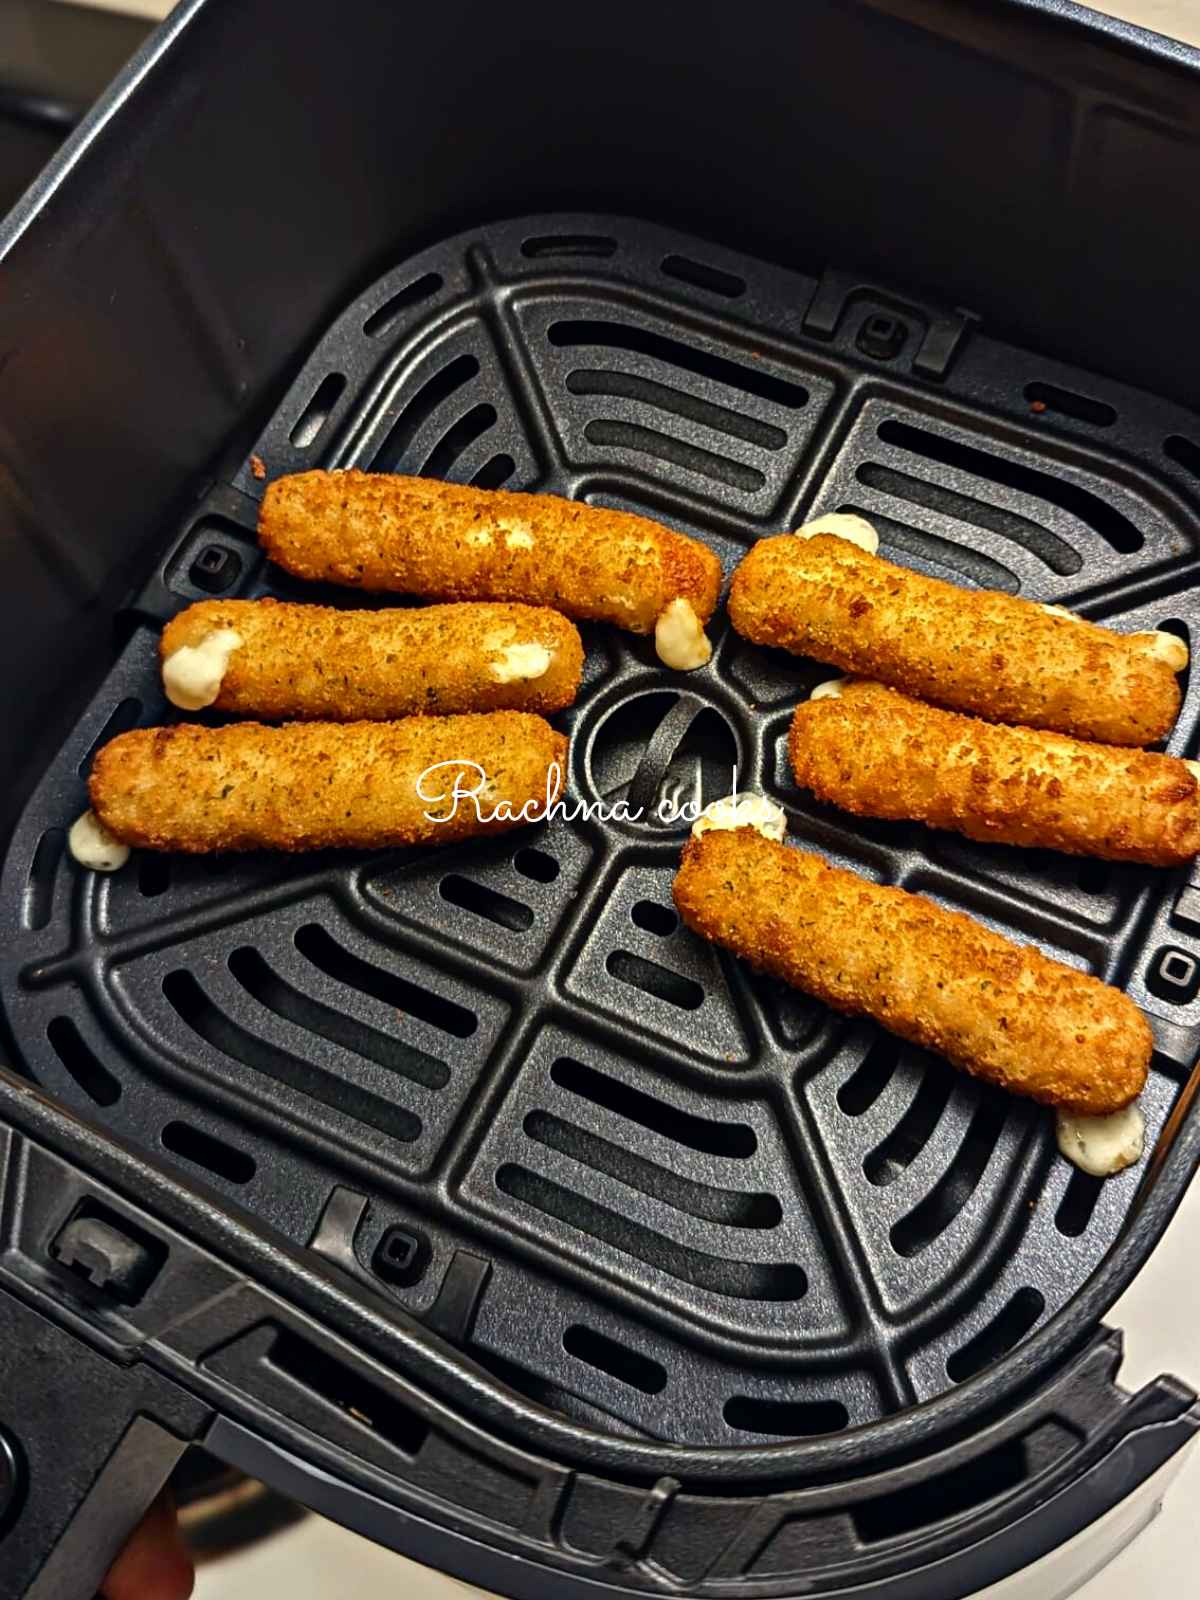 Crispy golden mozzarella sticks after air frying in air fryer basket.